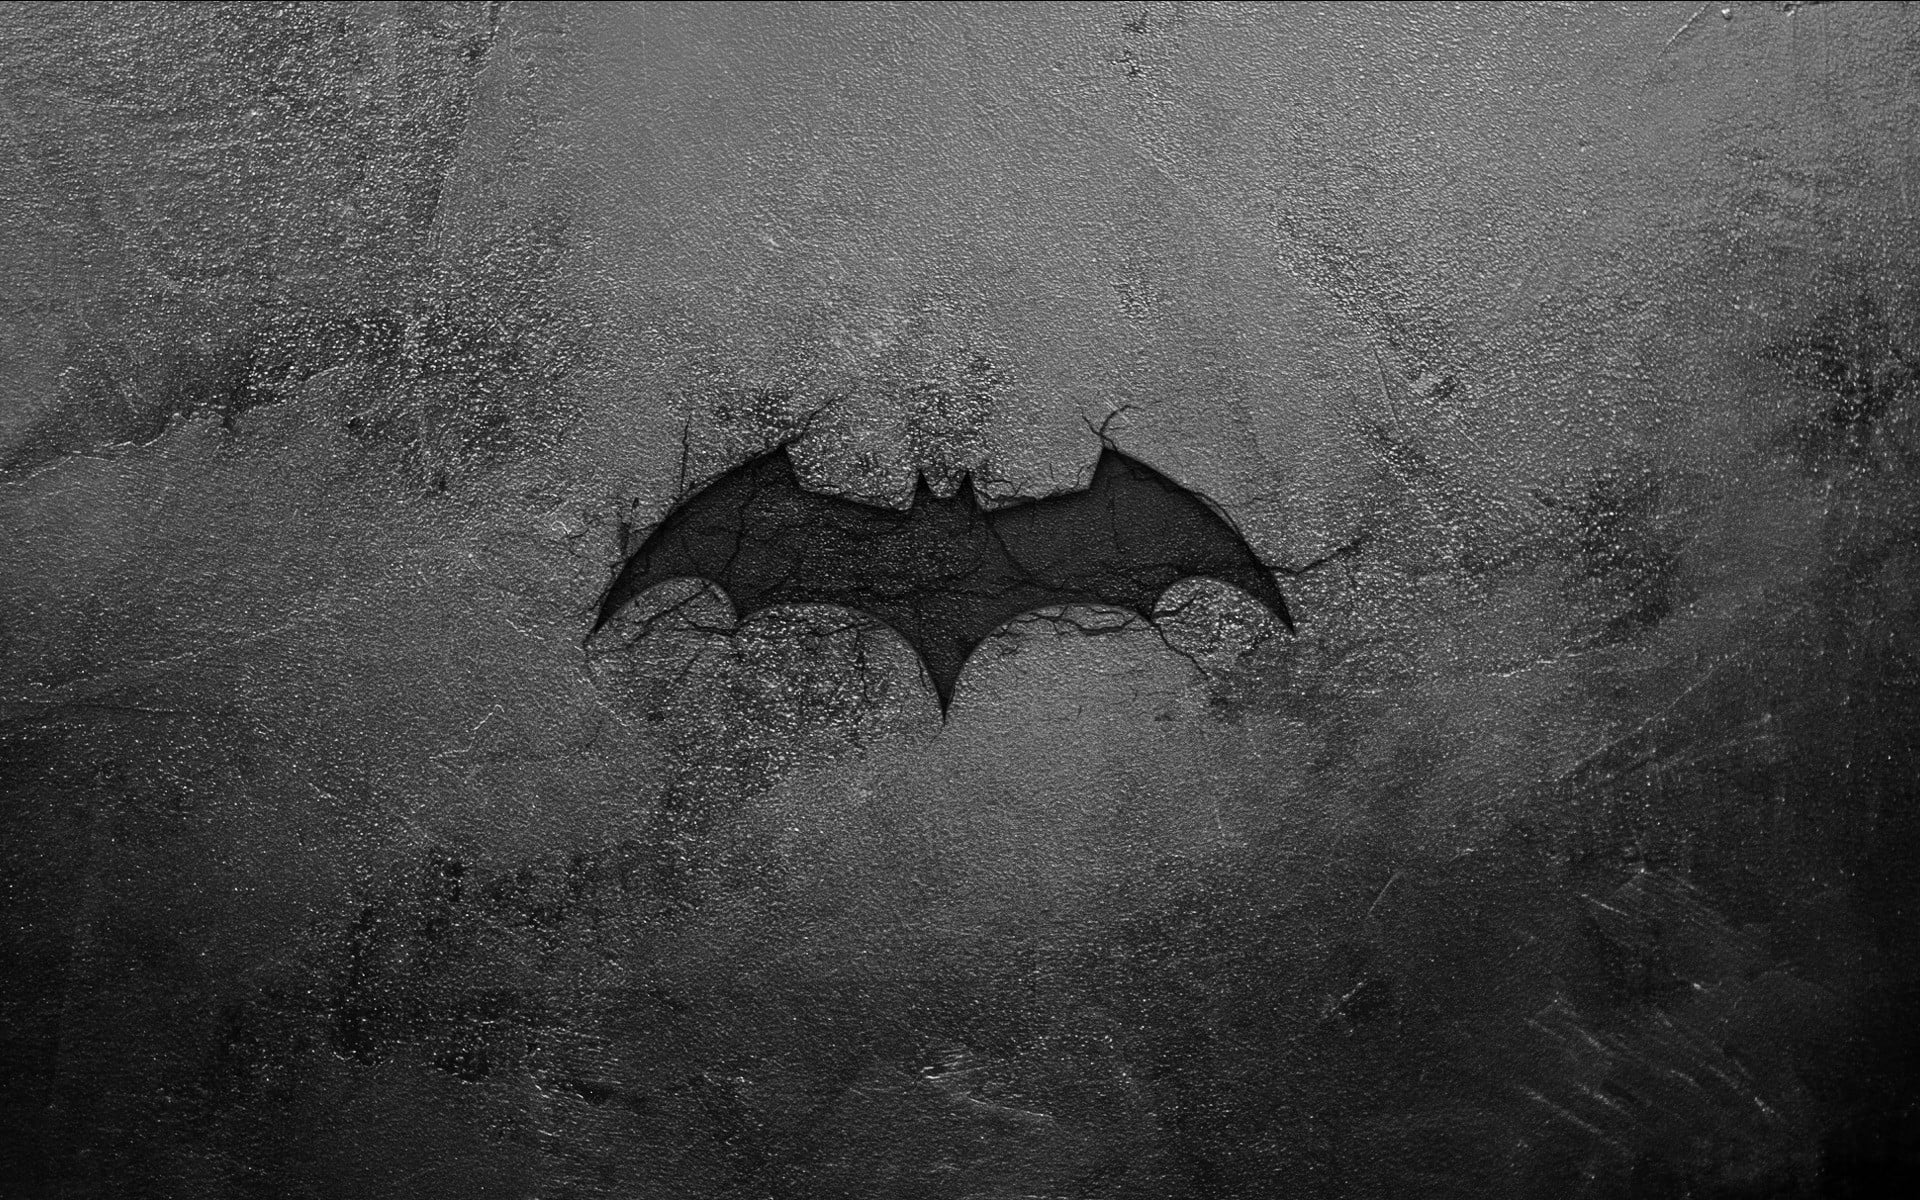 Batman wallpaper, Batman logo, black, no people, animal, textured